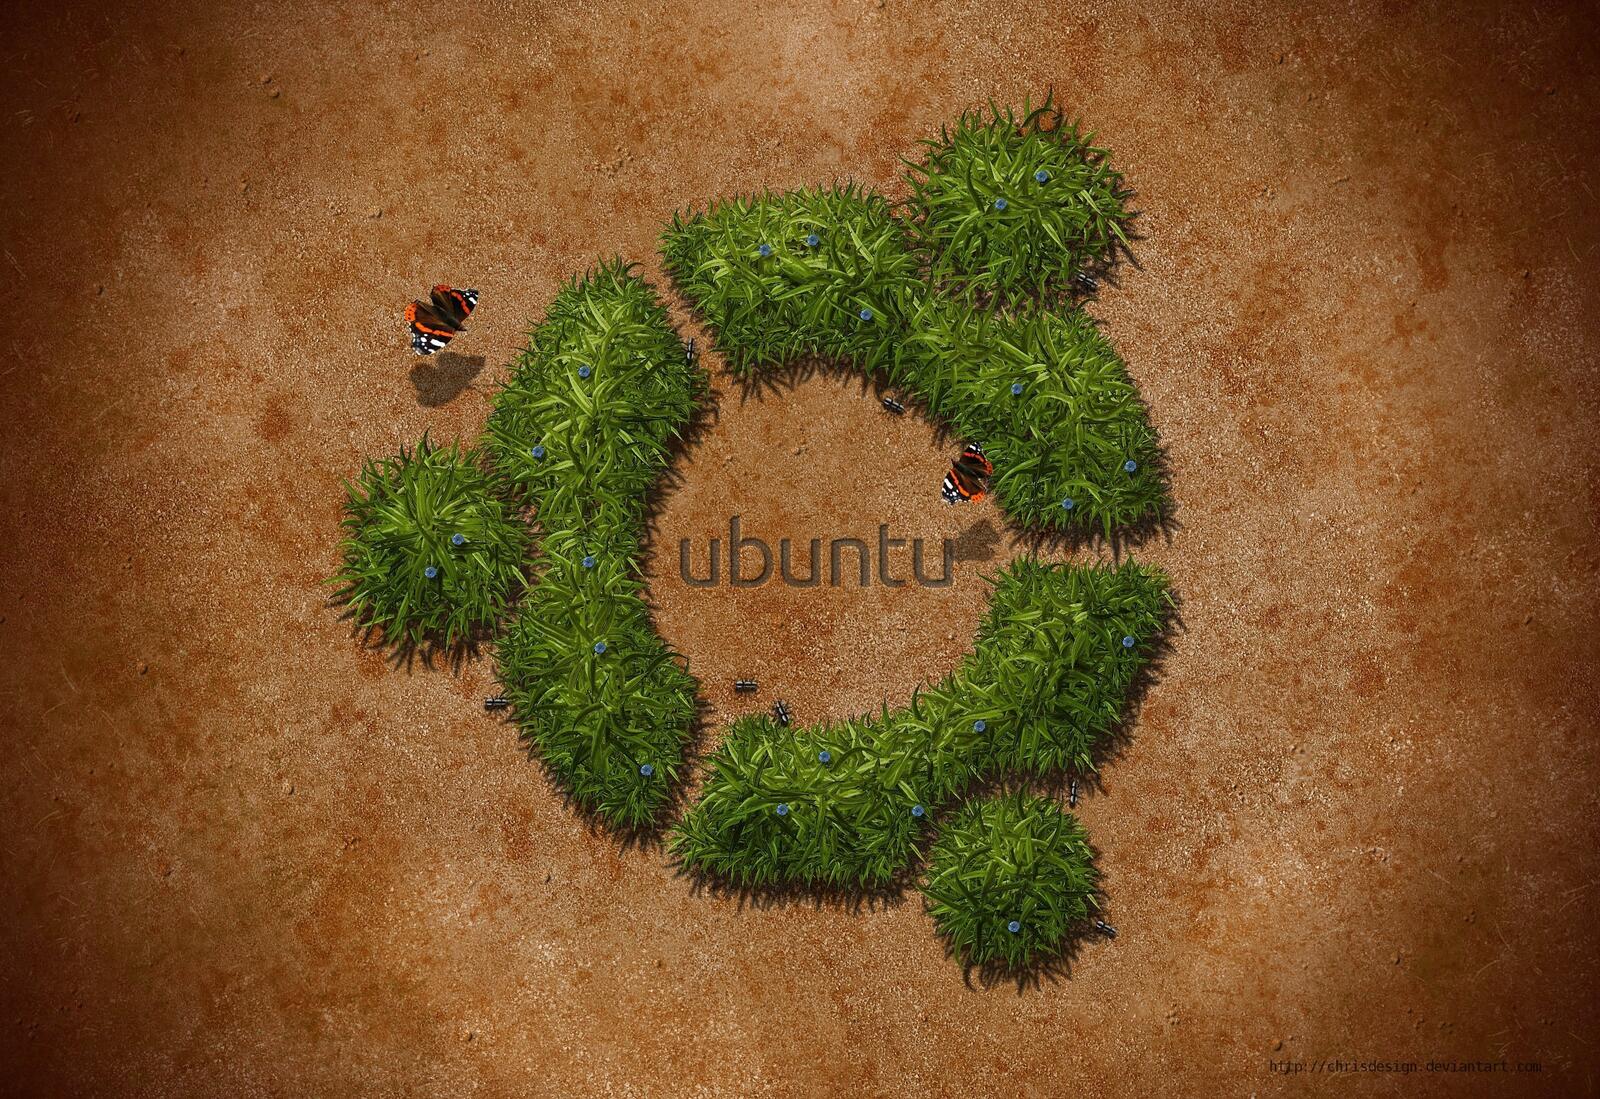 Wallpapers GNU Linux ubuntu on the desktop